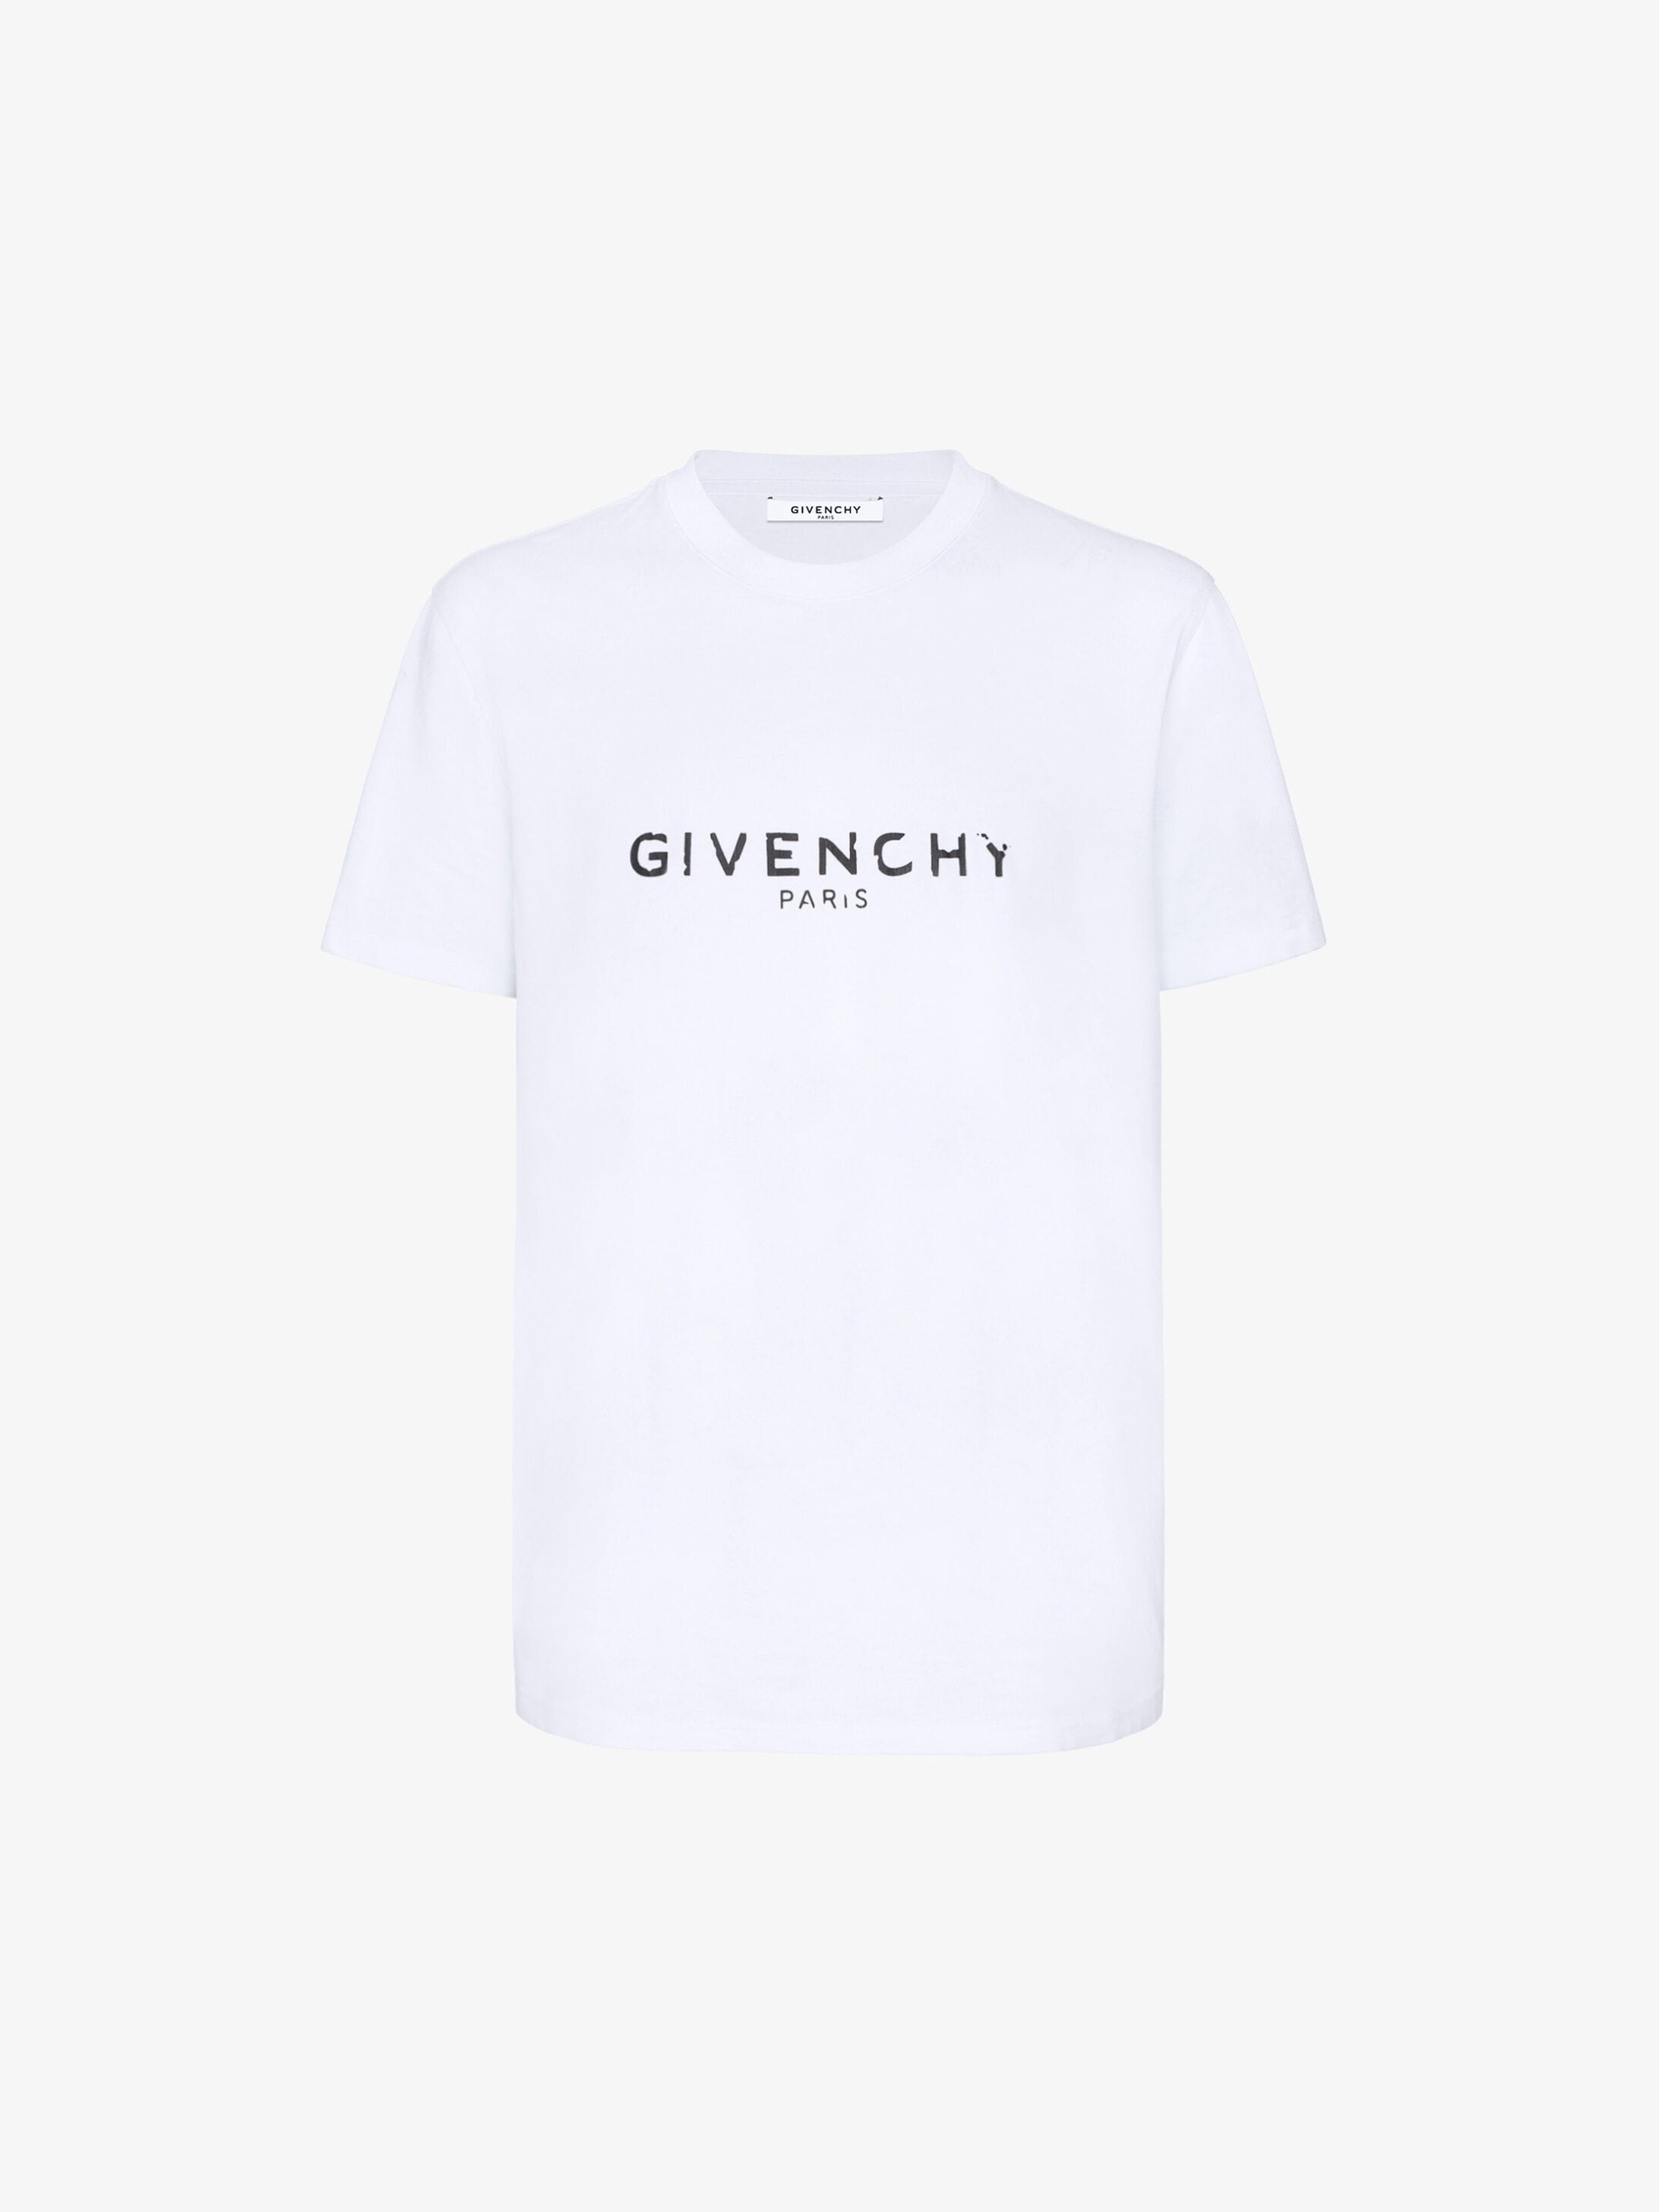 givenchy t shirt mens white